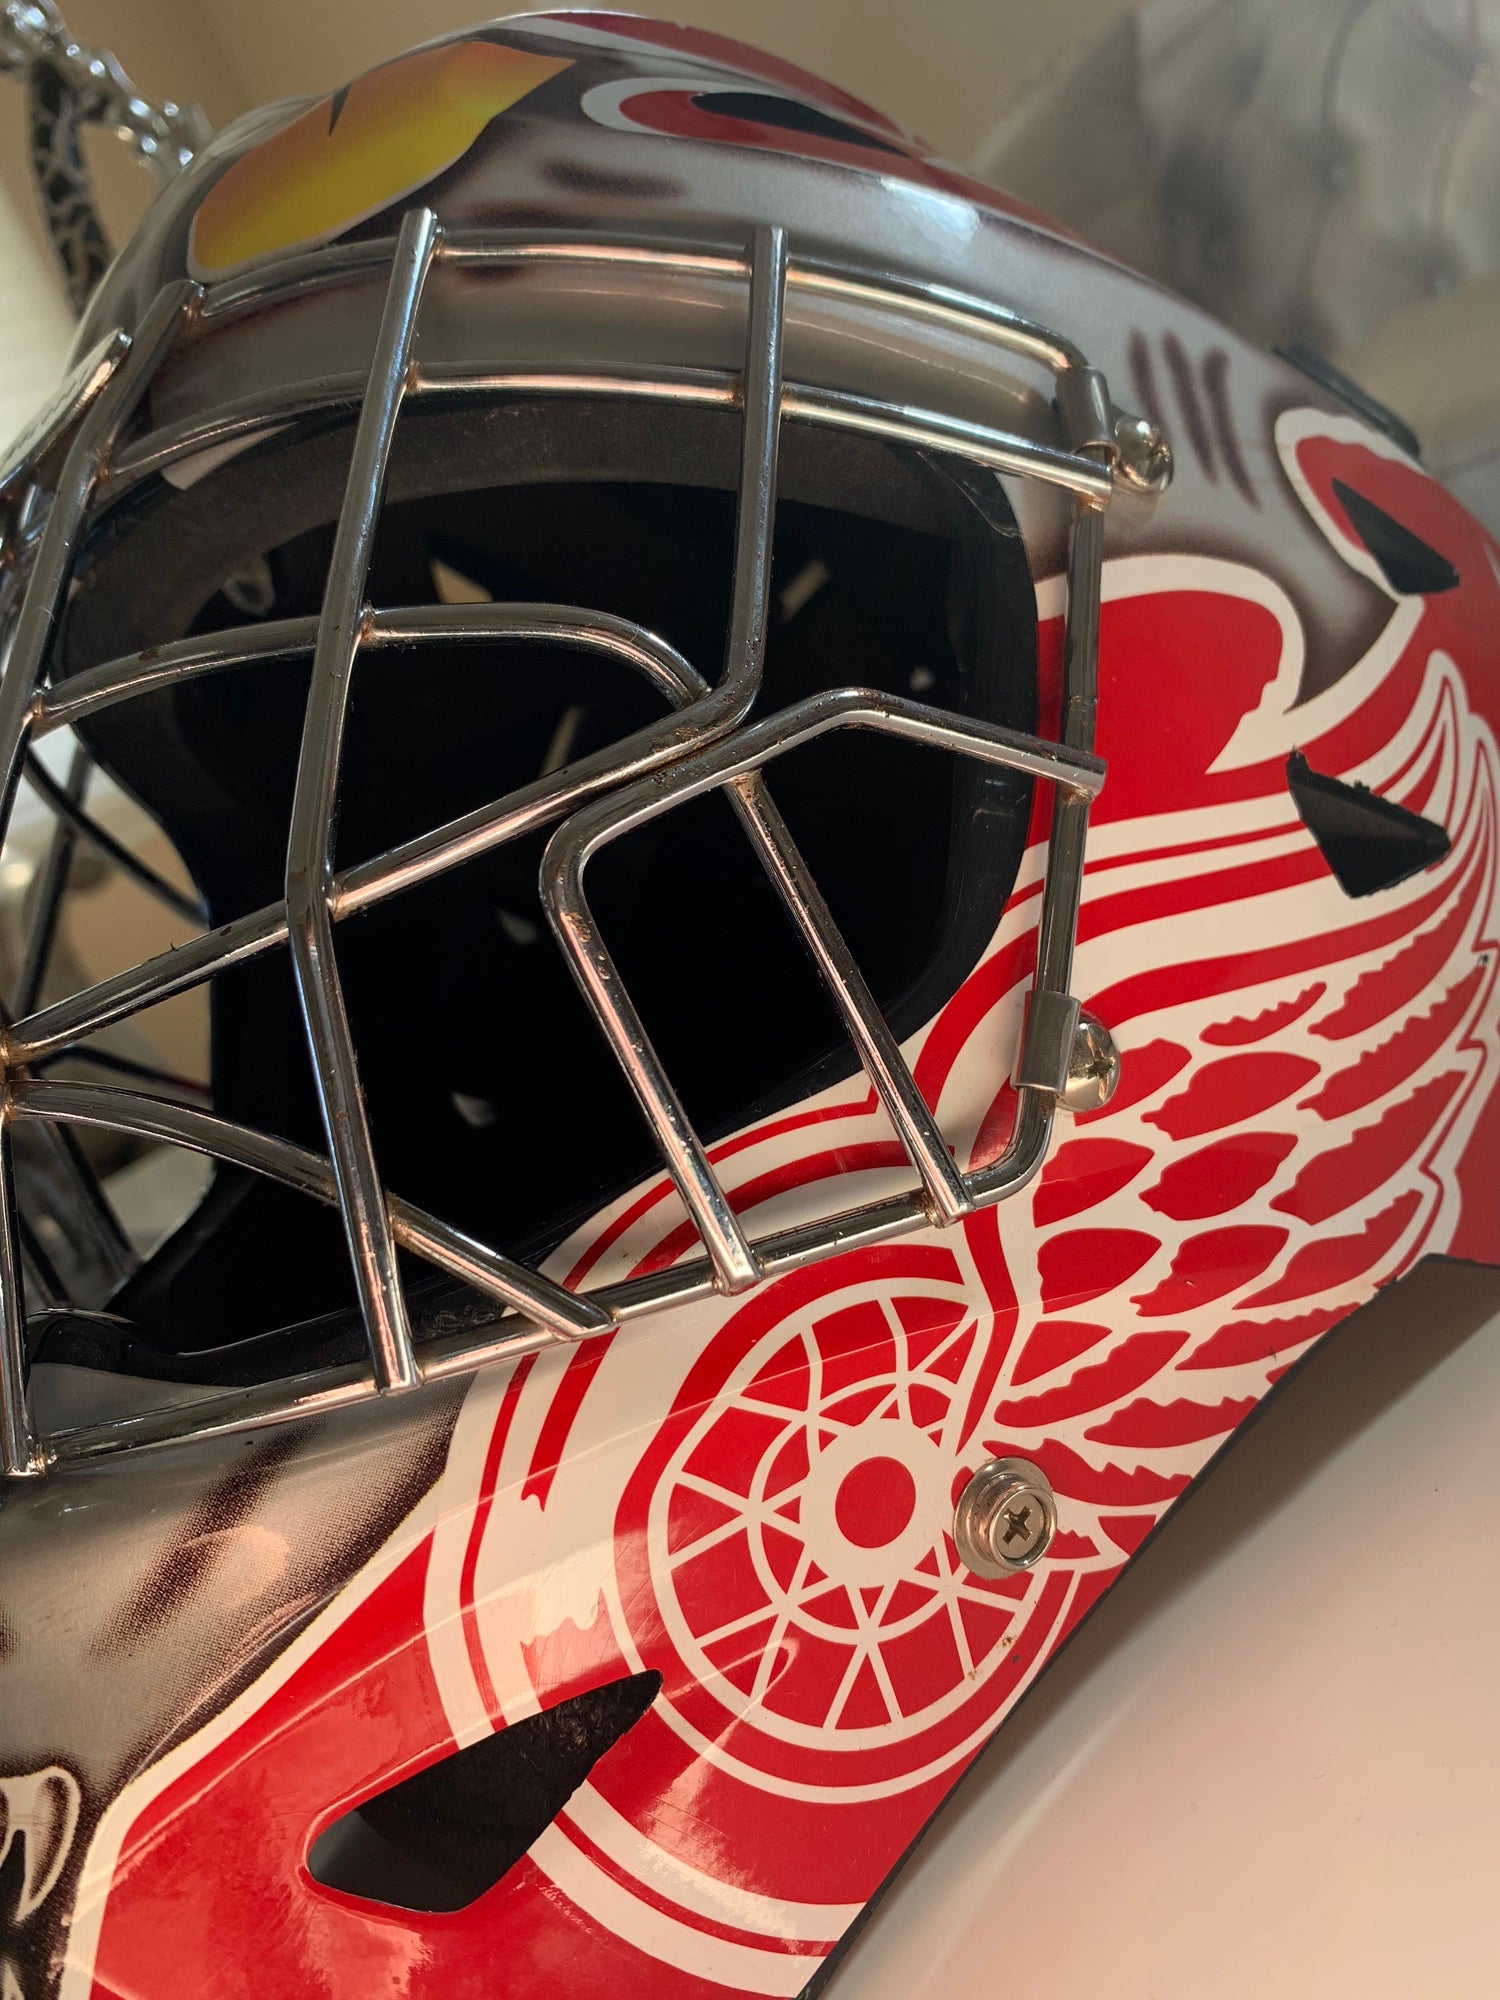 Itech Detroit Red Wings Adult Street Hockey Goalie Helmet With Mask Rare  Design